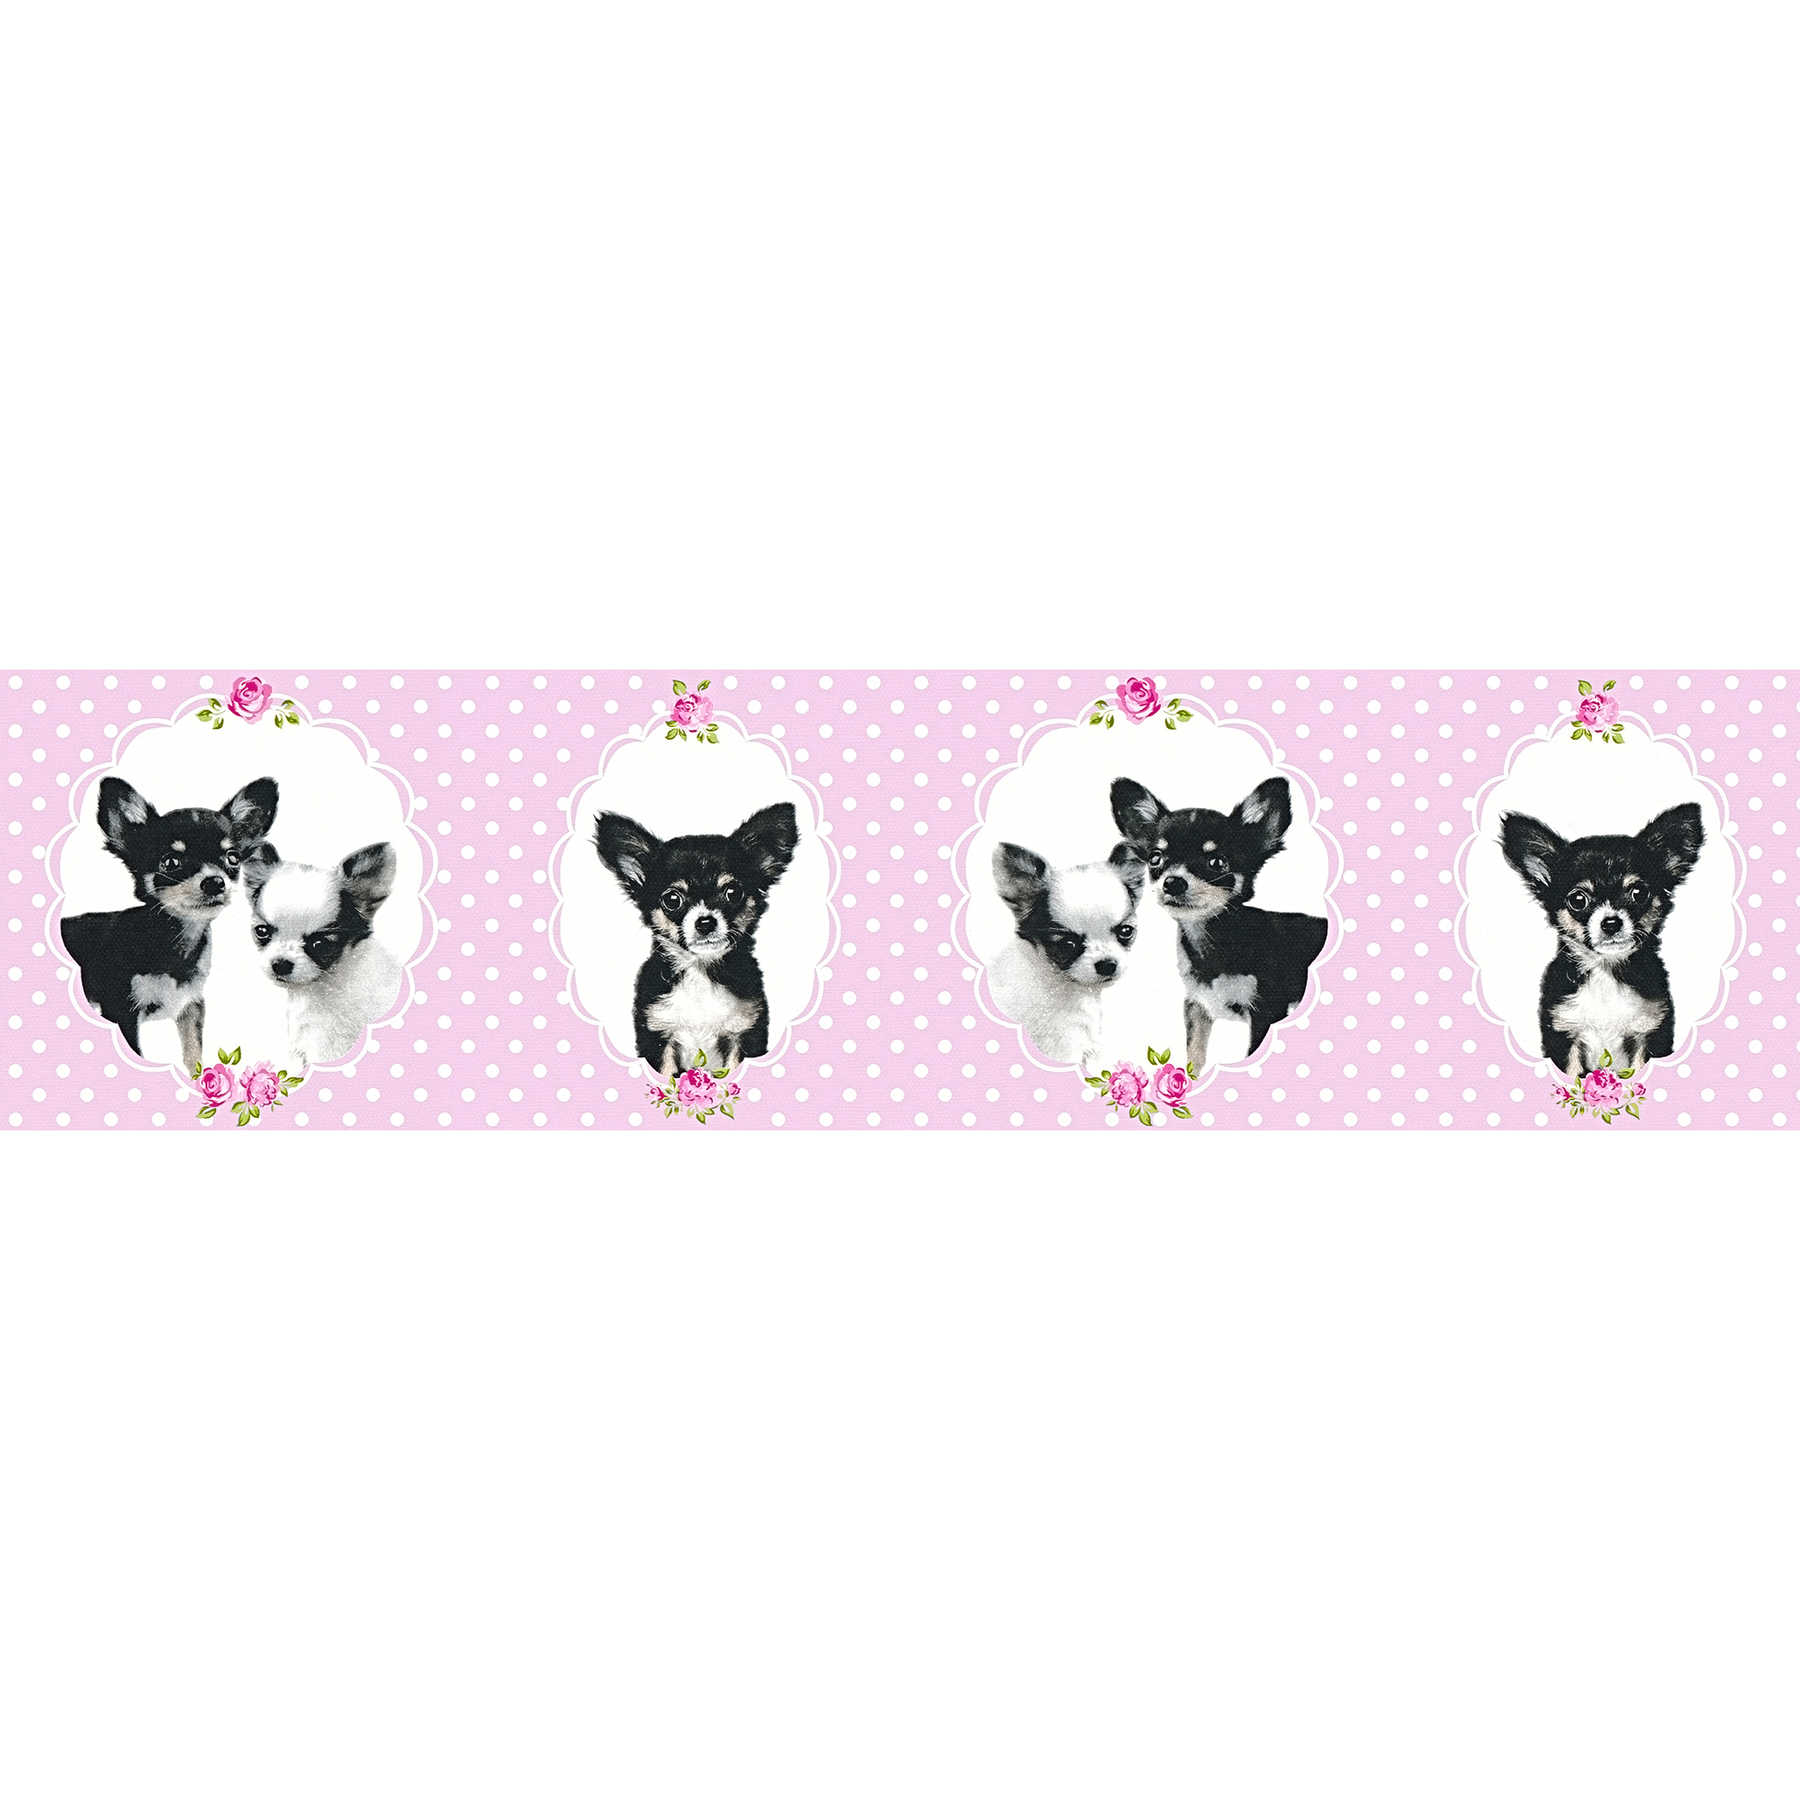 Wallpaper border dog puppies & dots pattern - Pink
